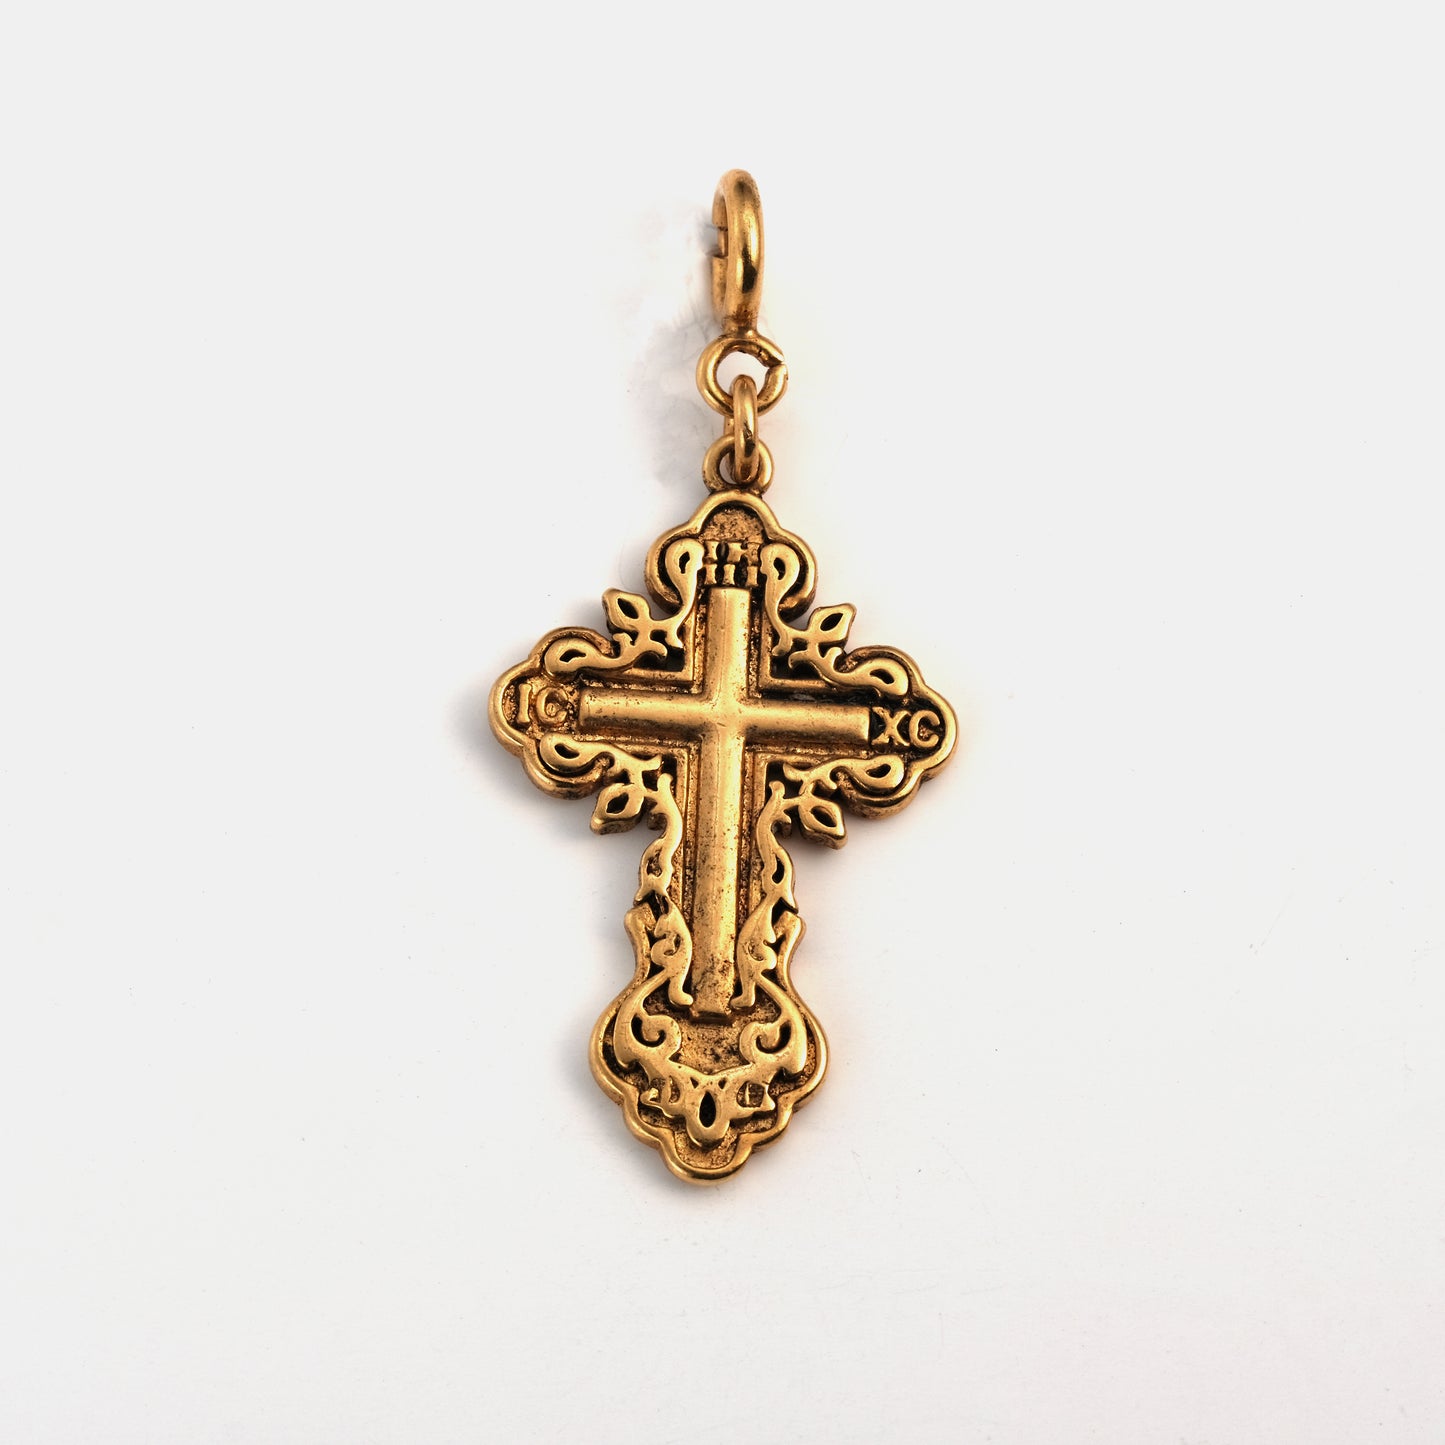 Decorated cross pendant